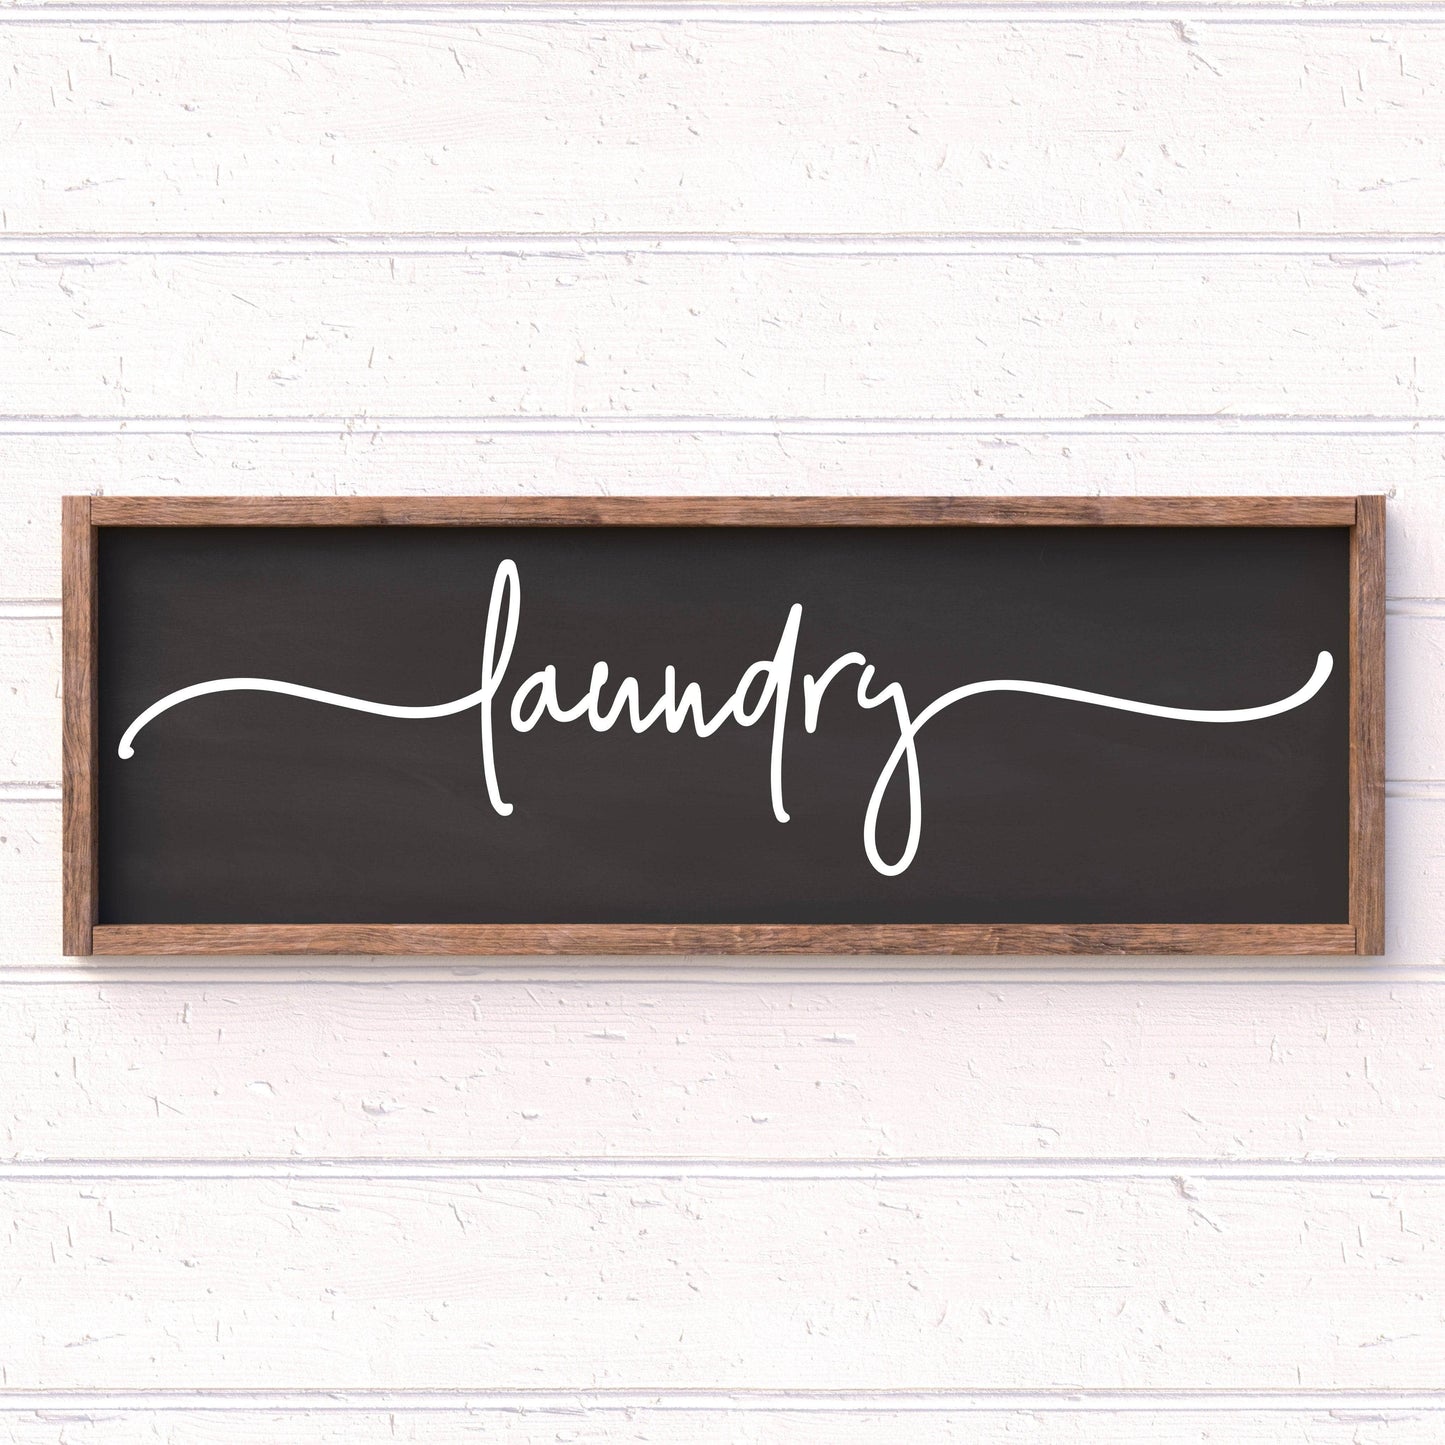 Laundry, framed laundry wood sign, laundry decor, home decor